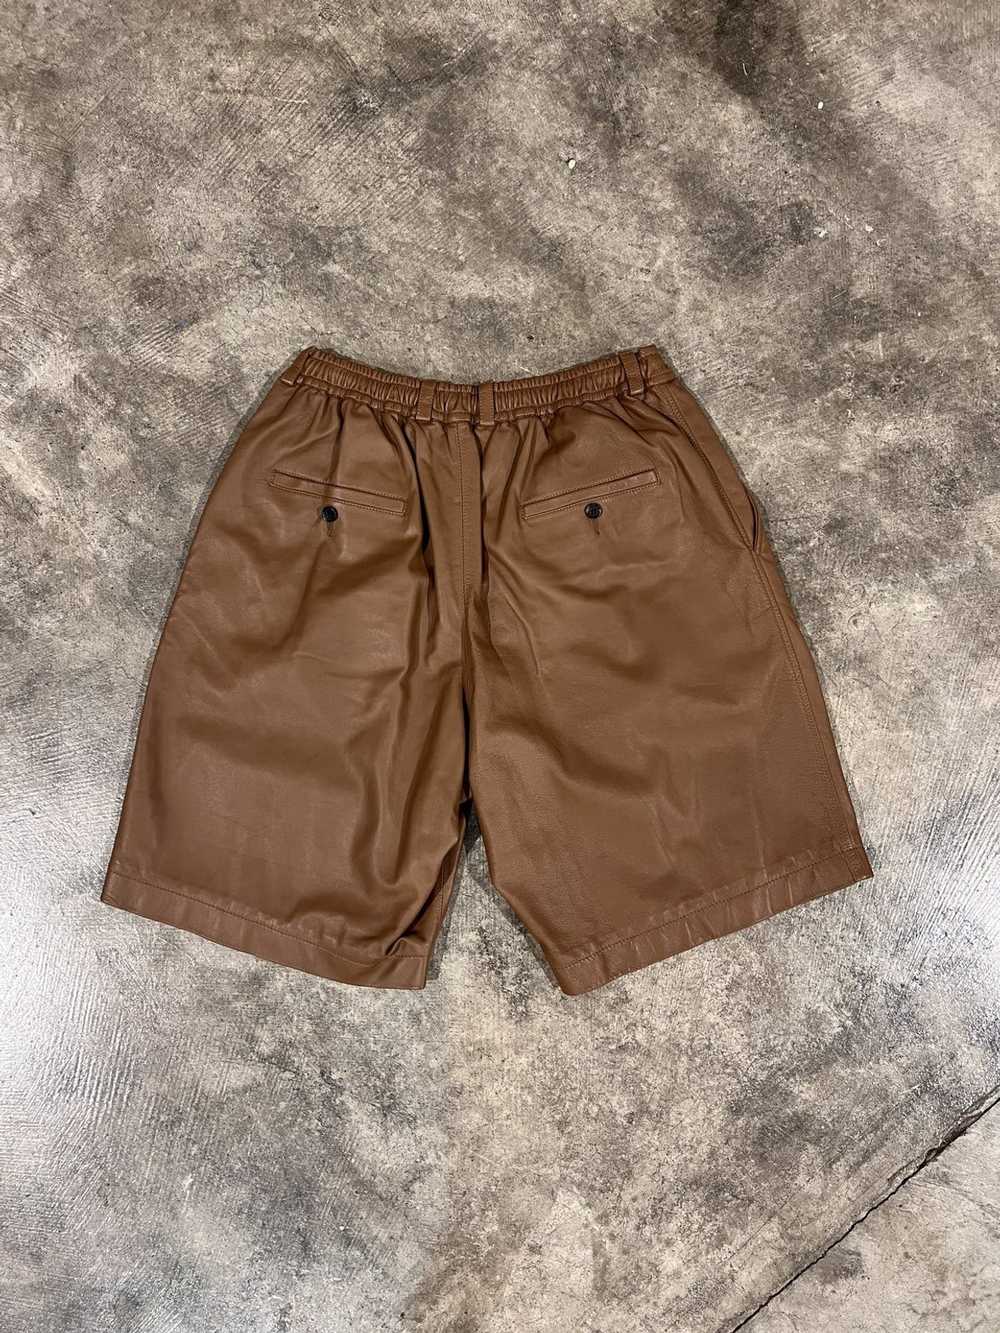 Marni Marni Leather Shorts - image 3